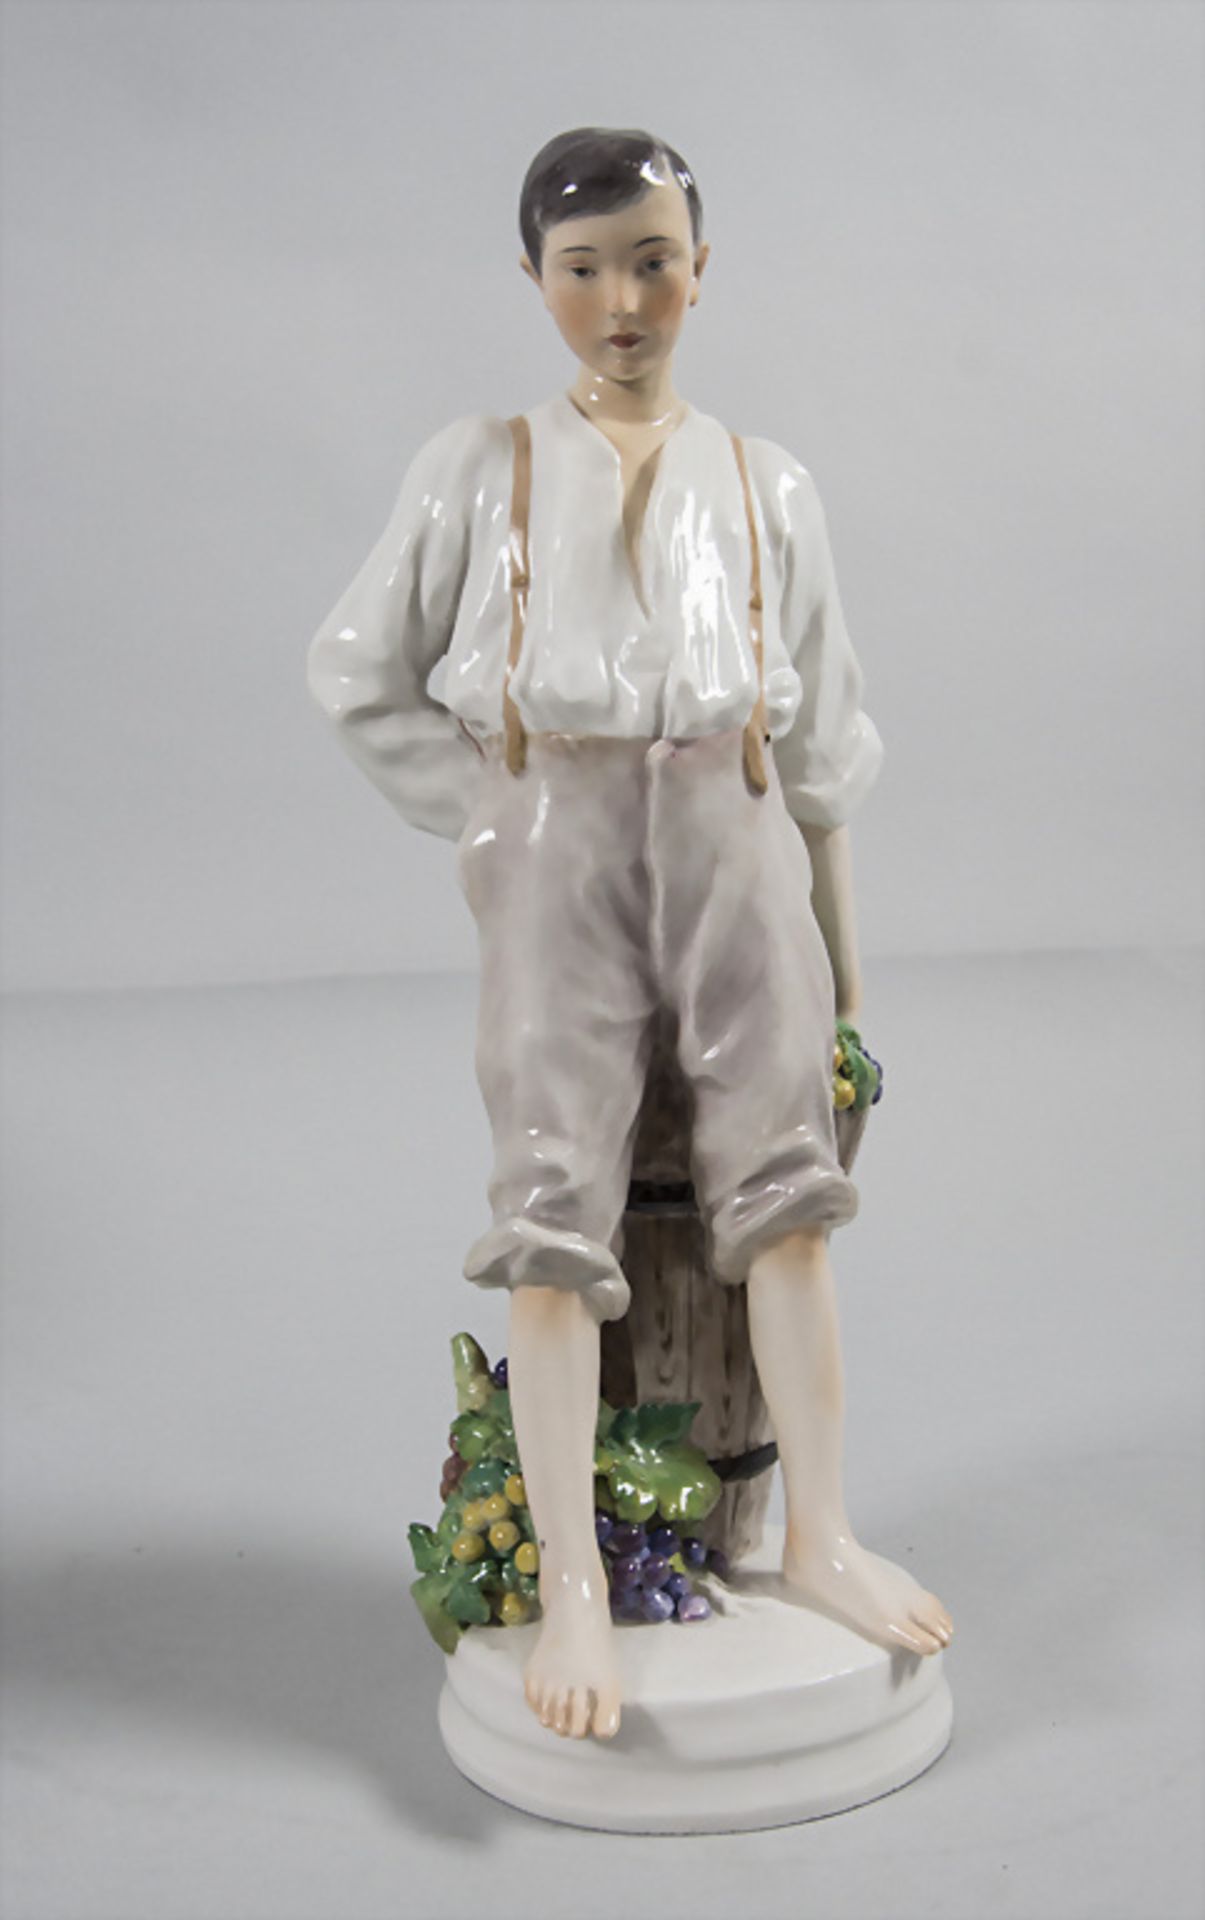 Jugendstil Figur 'Winzerknabe' / An Art Nouveau figurine of a young winemaker, Theodor ...